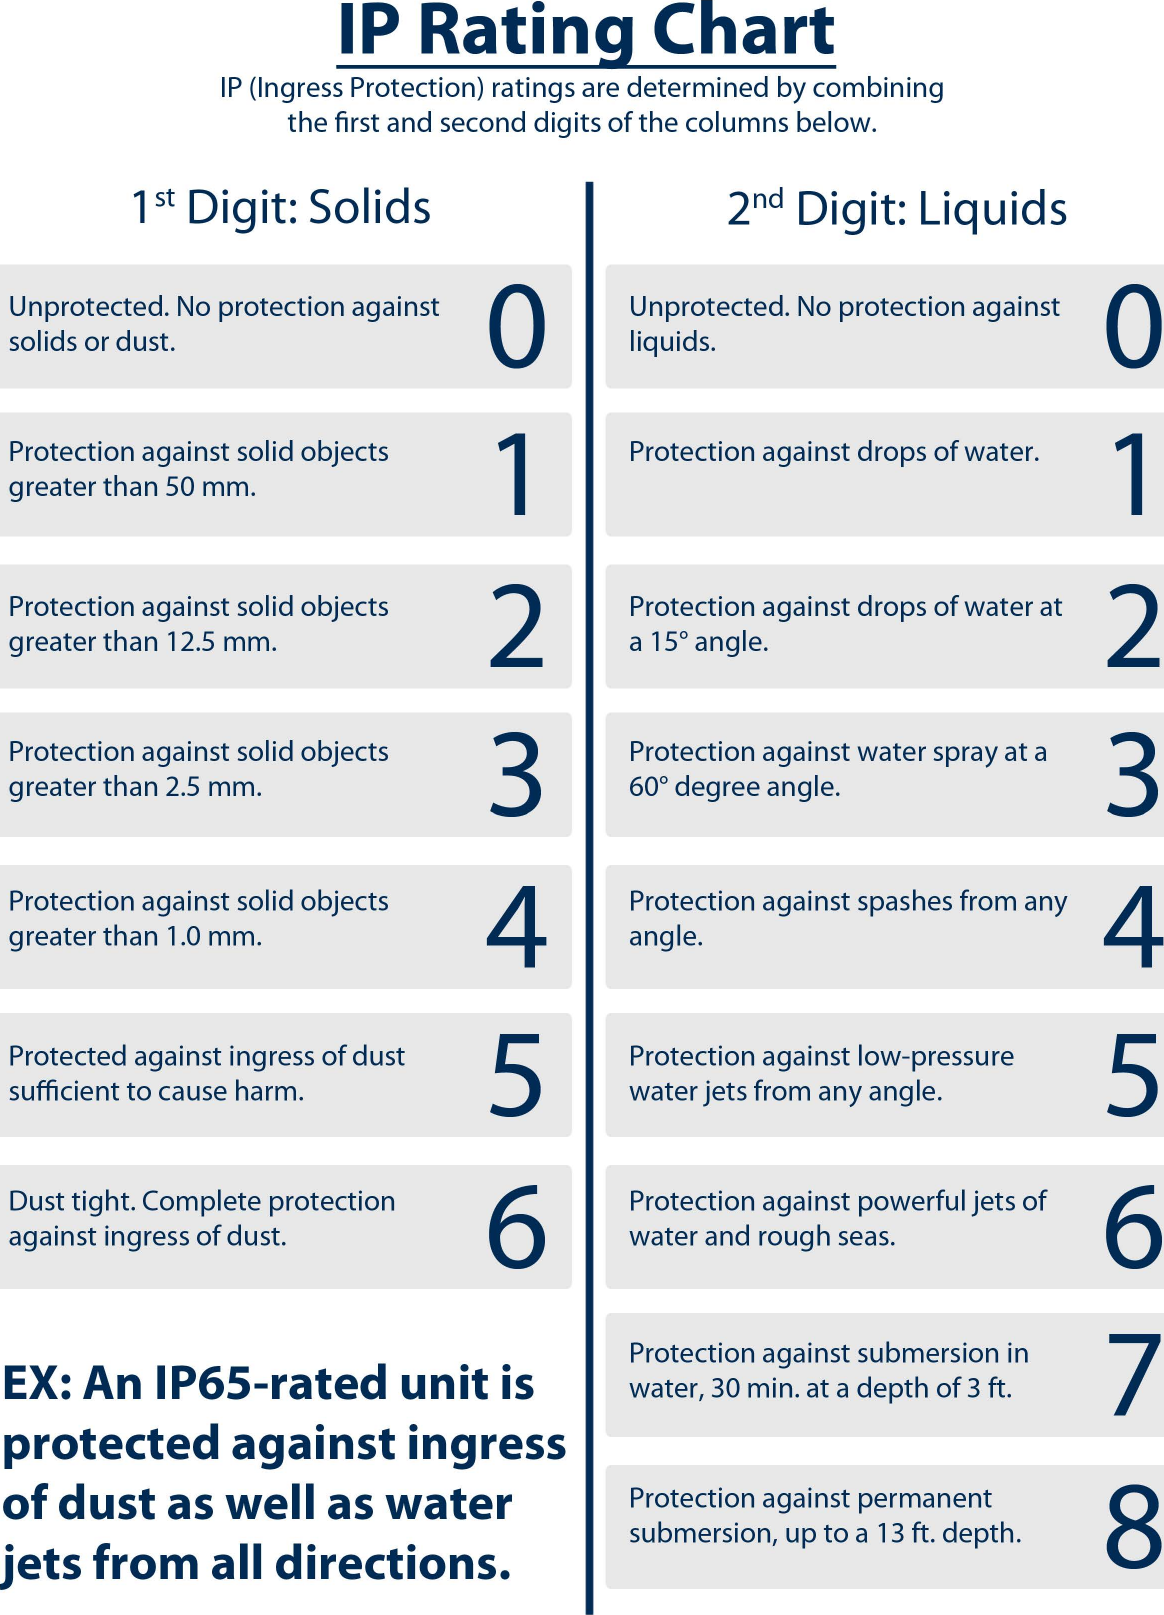 Ingress Protection Chart